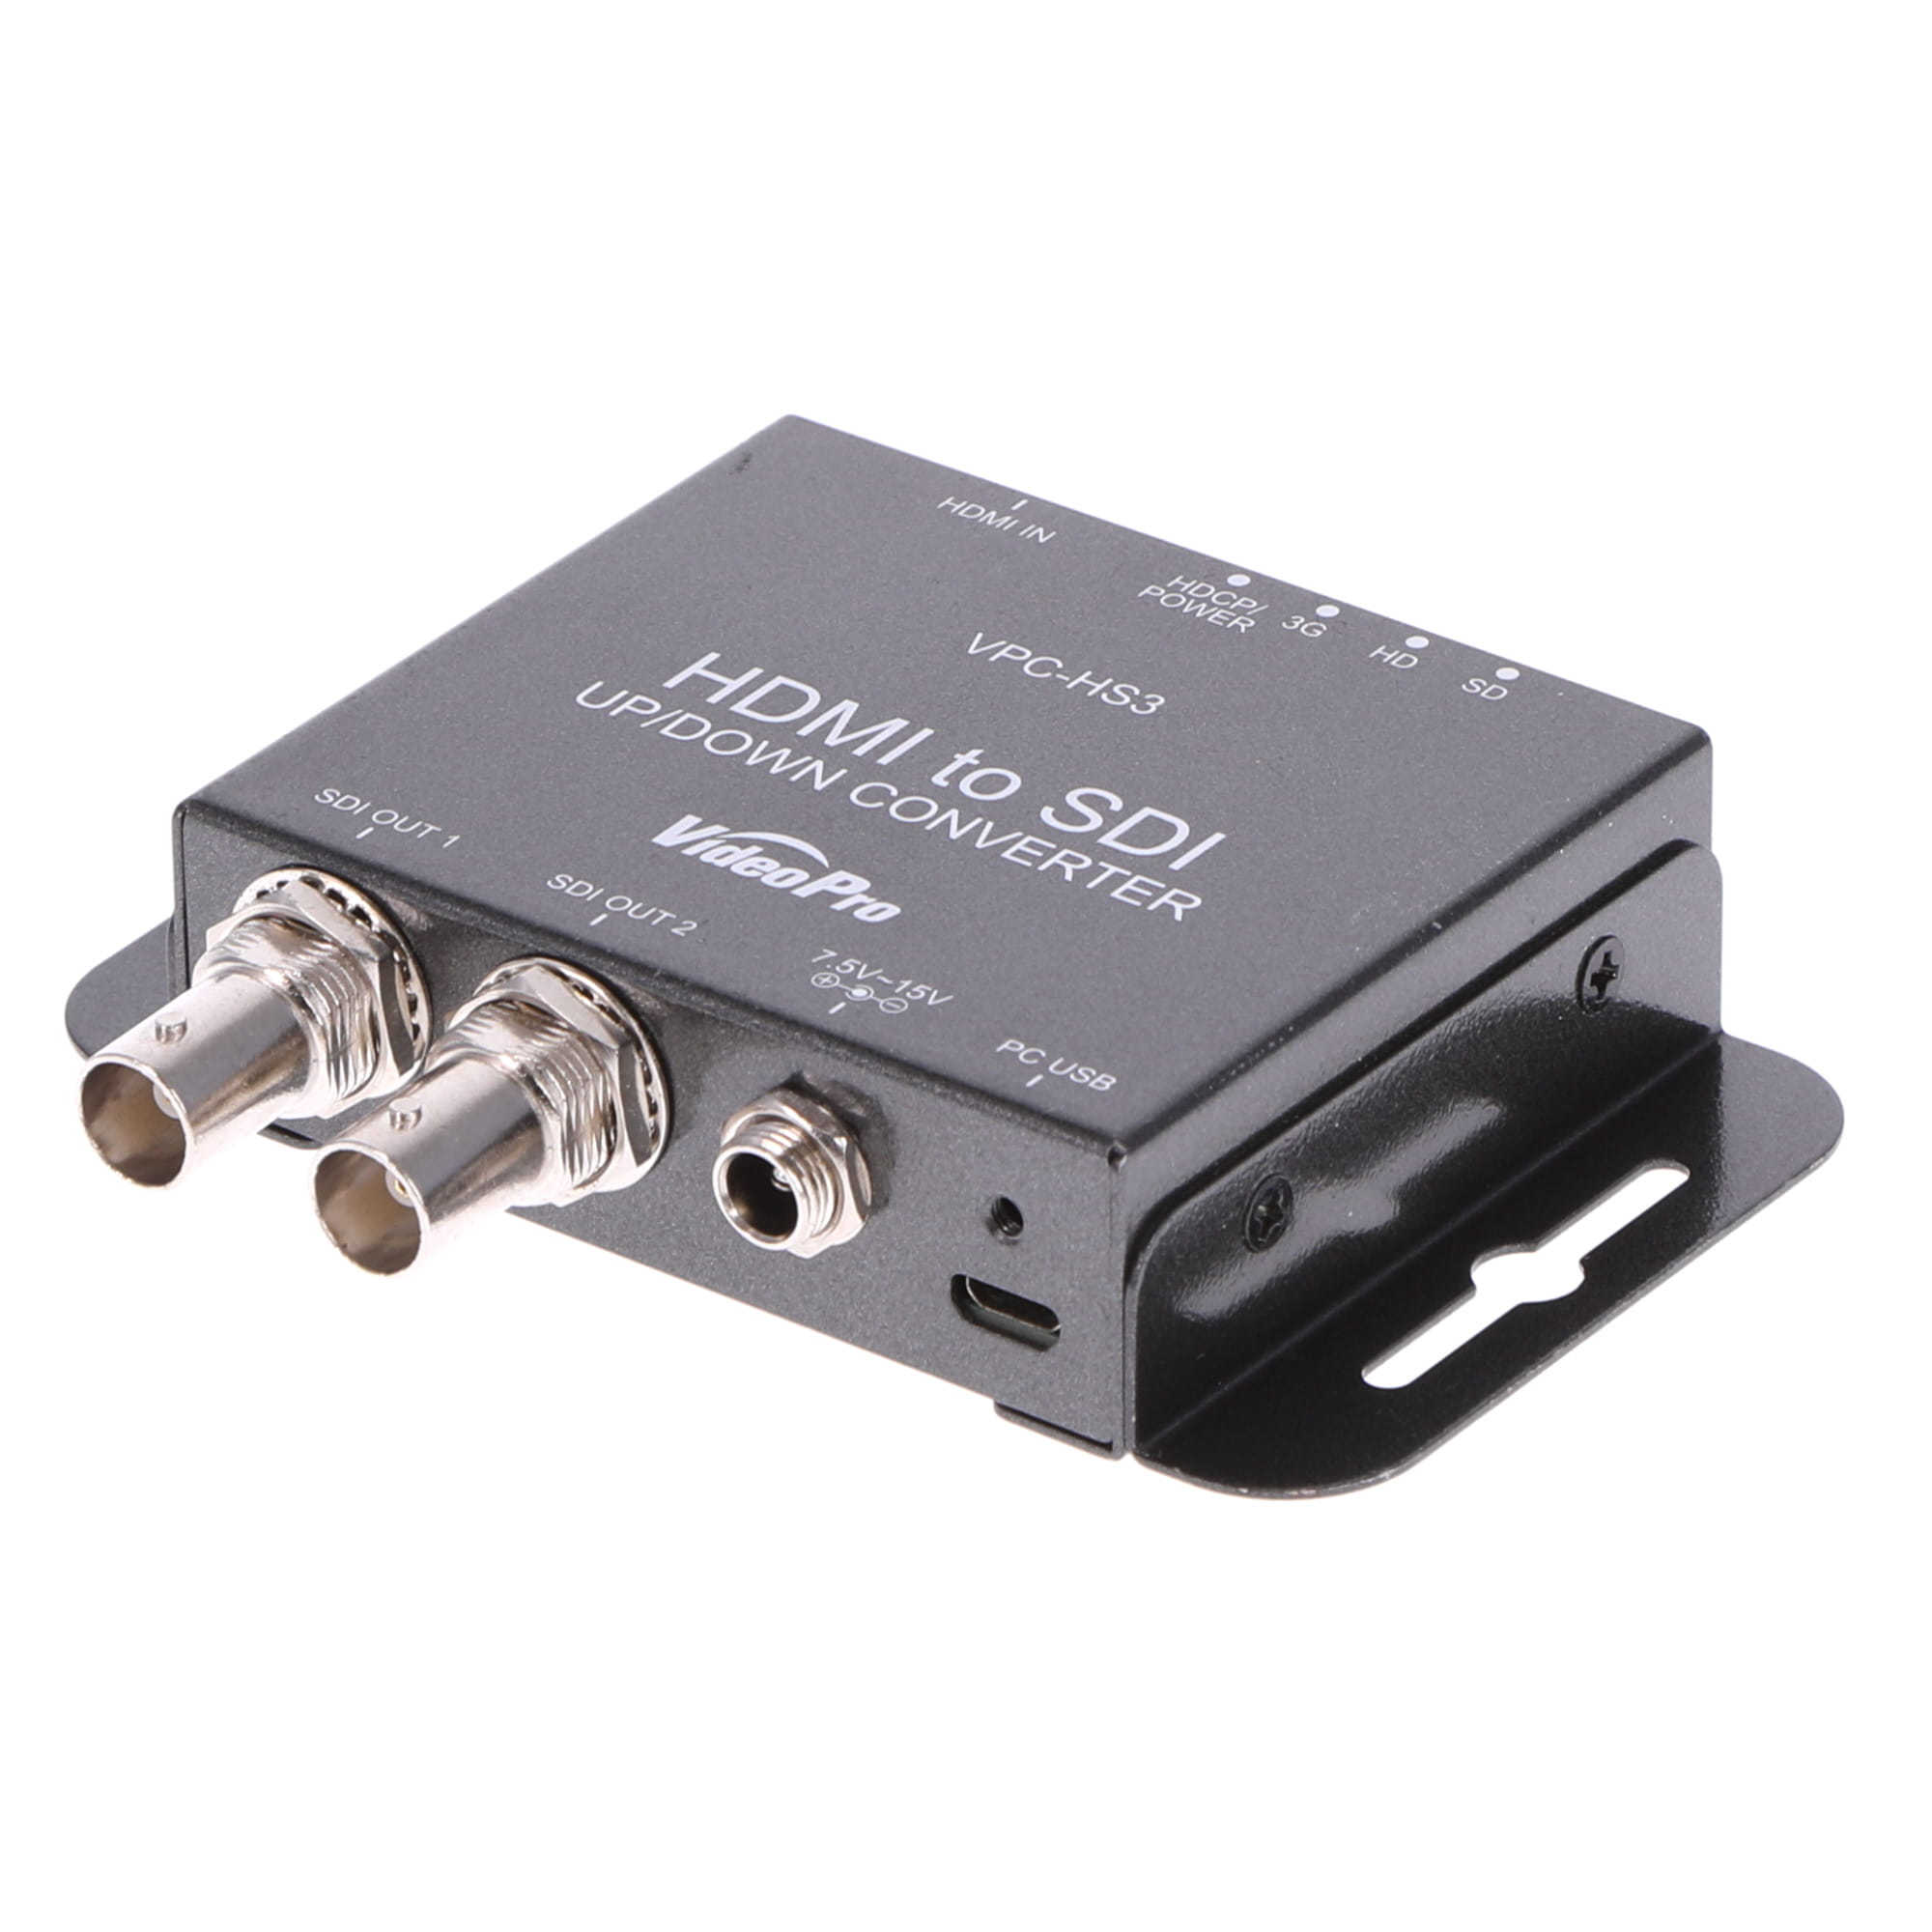 VPC-HS3 HDMI to SDIコンバーター Video Pro-